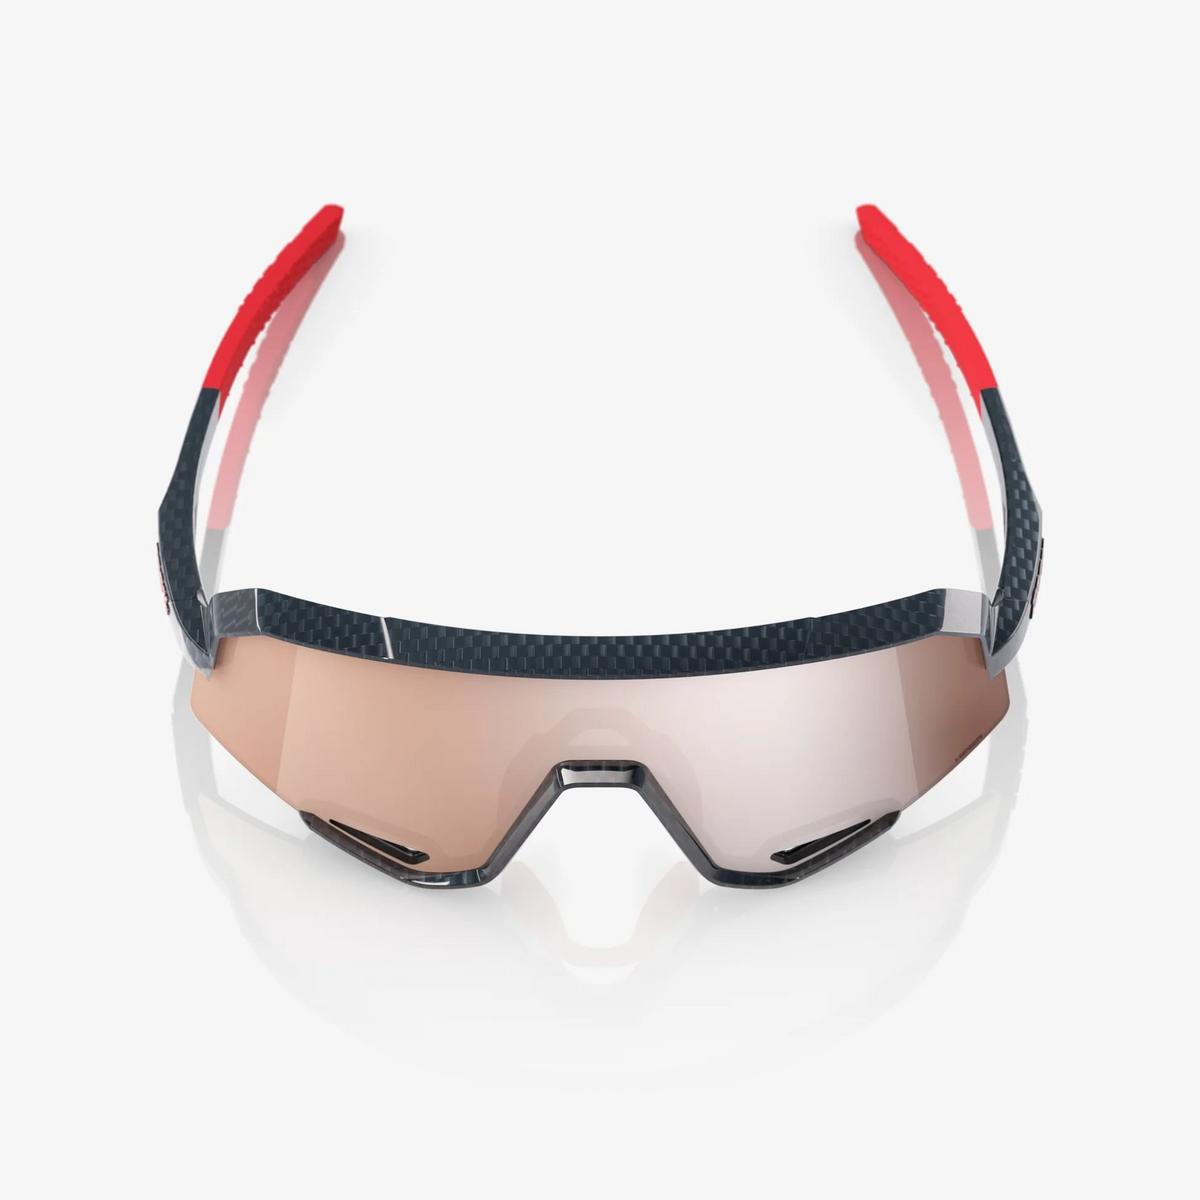 100% Slendale Sunglasses - Gloss Carbon Fibre - HiPER Crimson Silver Mirror Lens